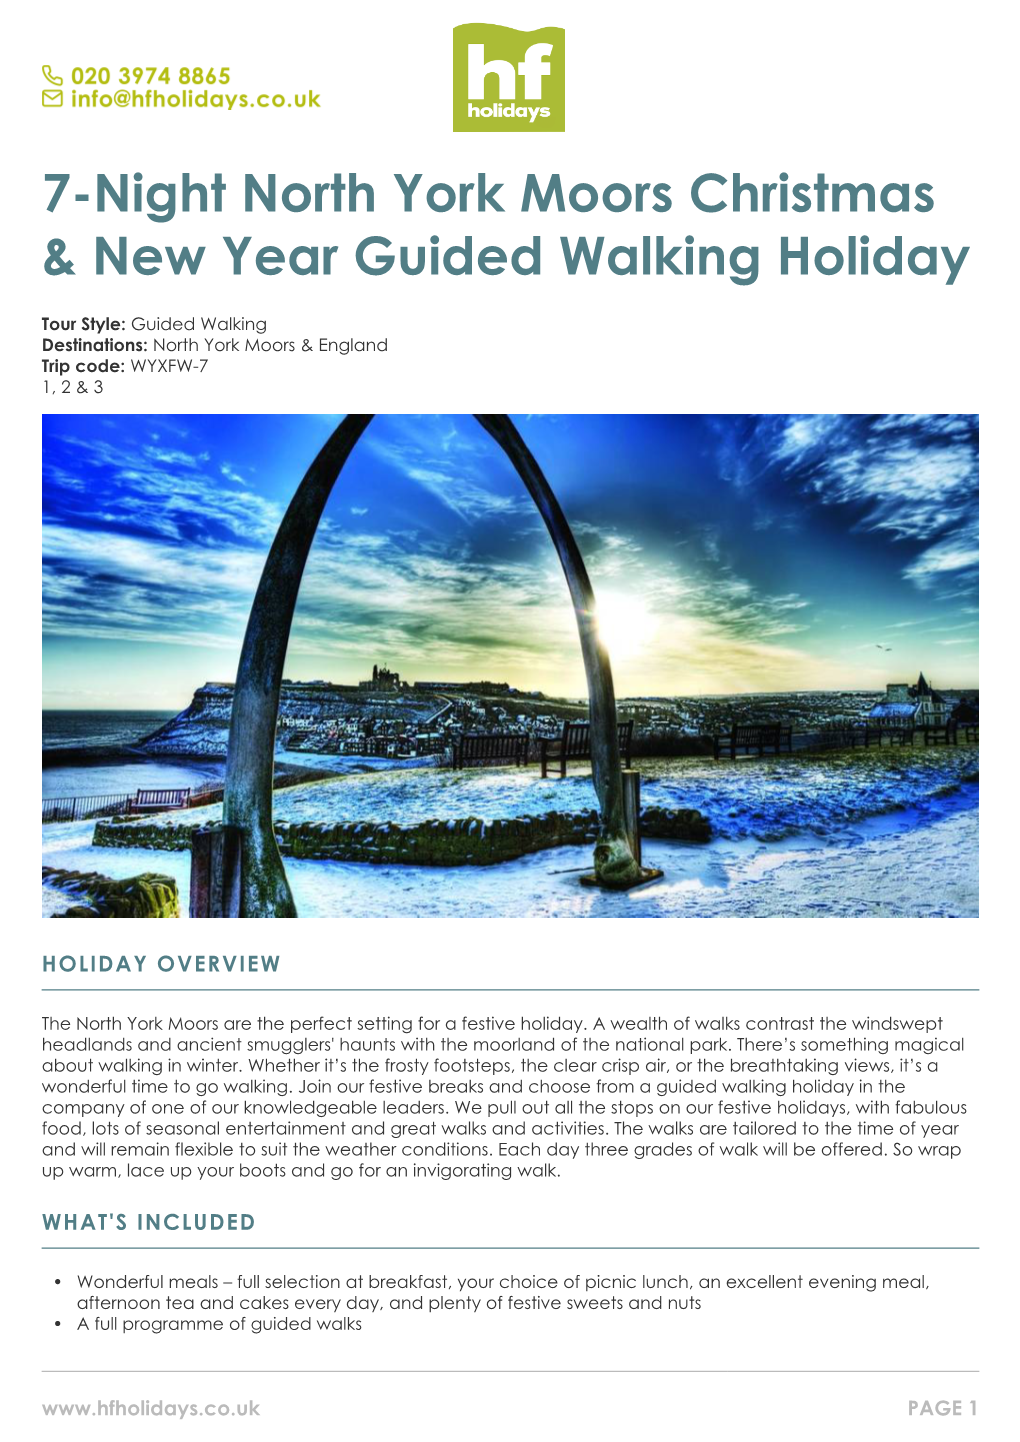 7-Night North York Moors Christmas & New Year Guided Walking Holiday